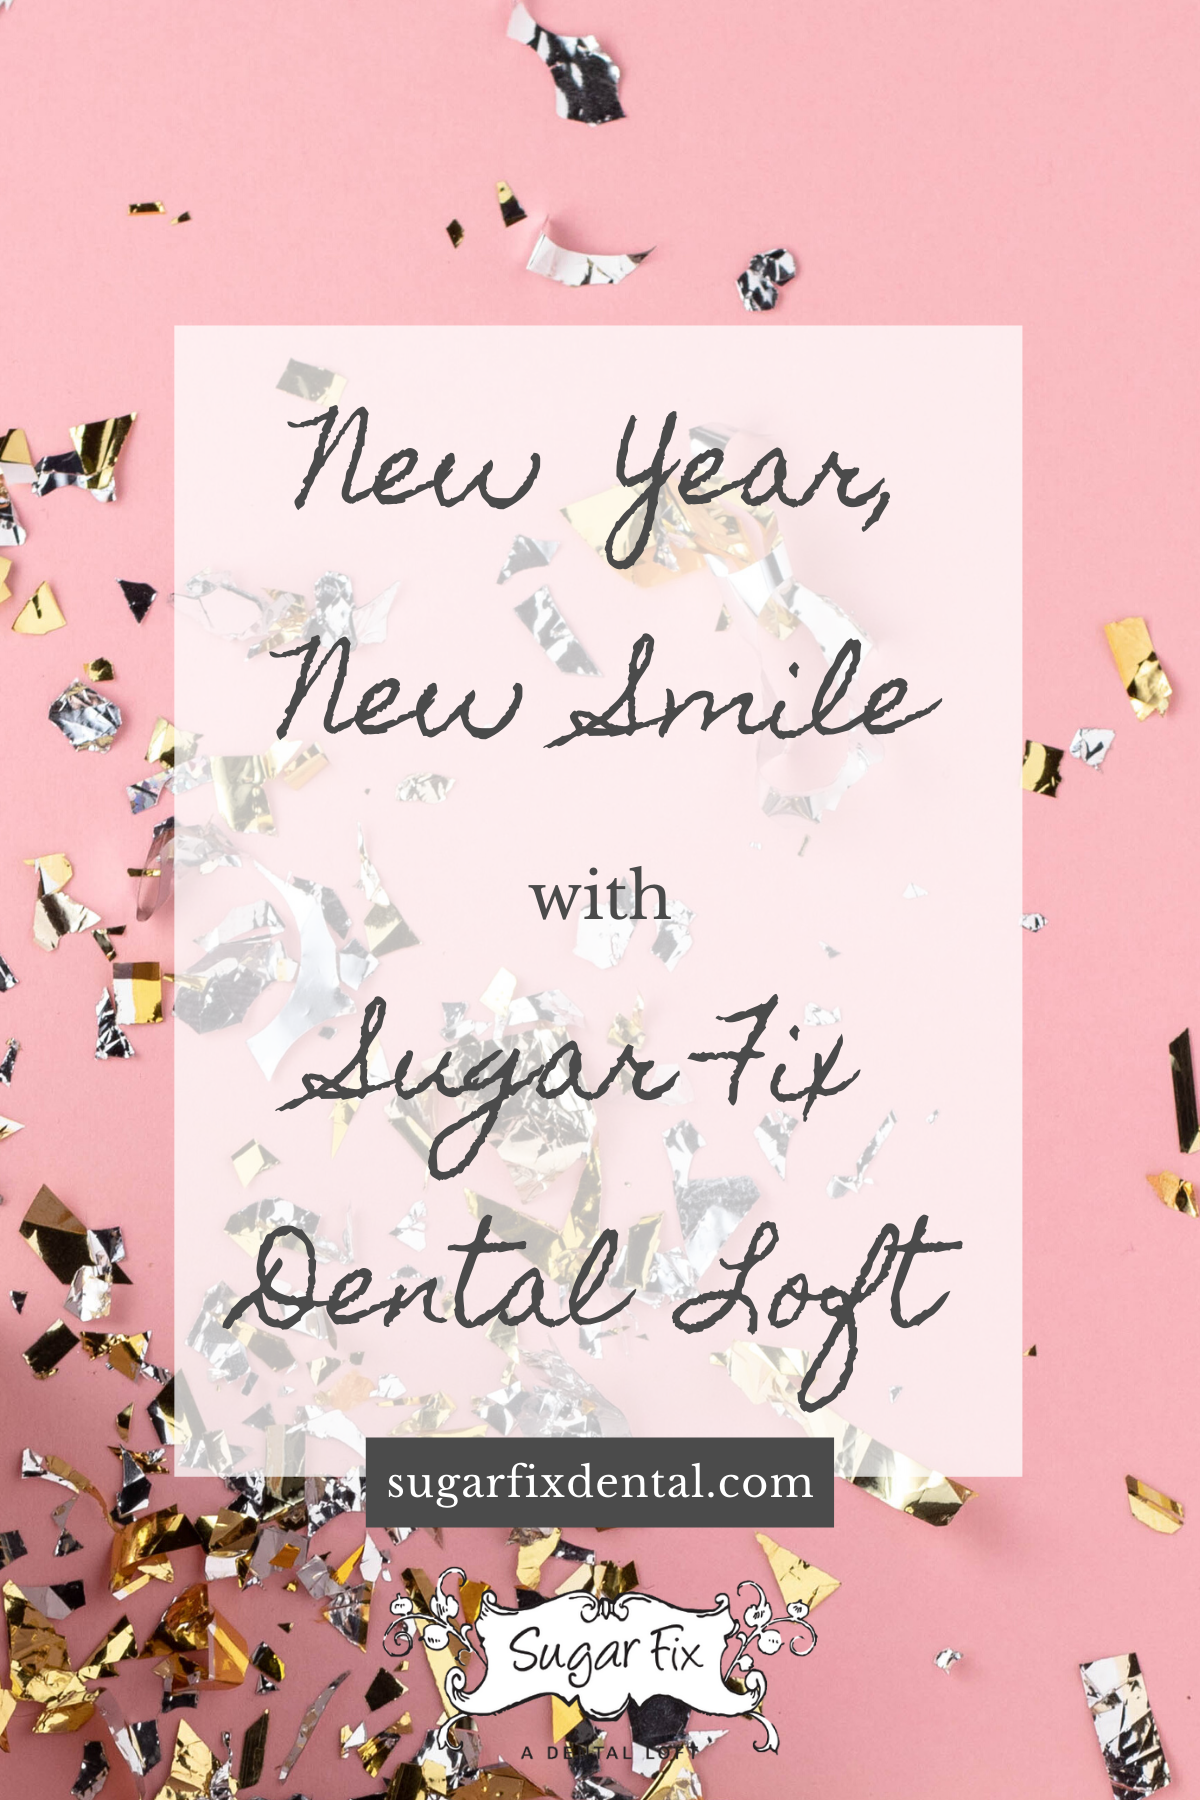 New Year, New Smile with Sugar Fix Dental Loft